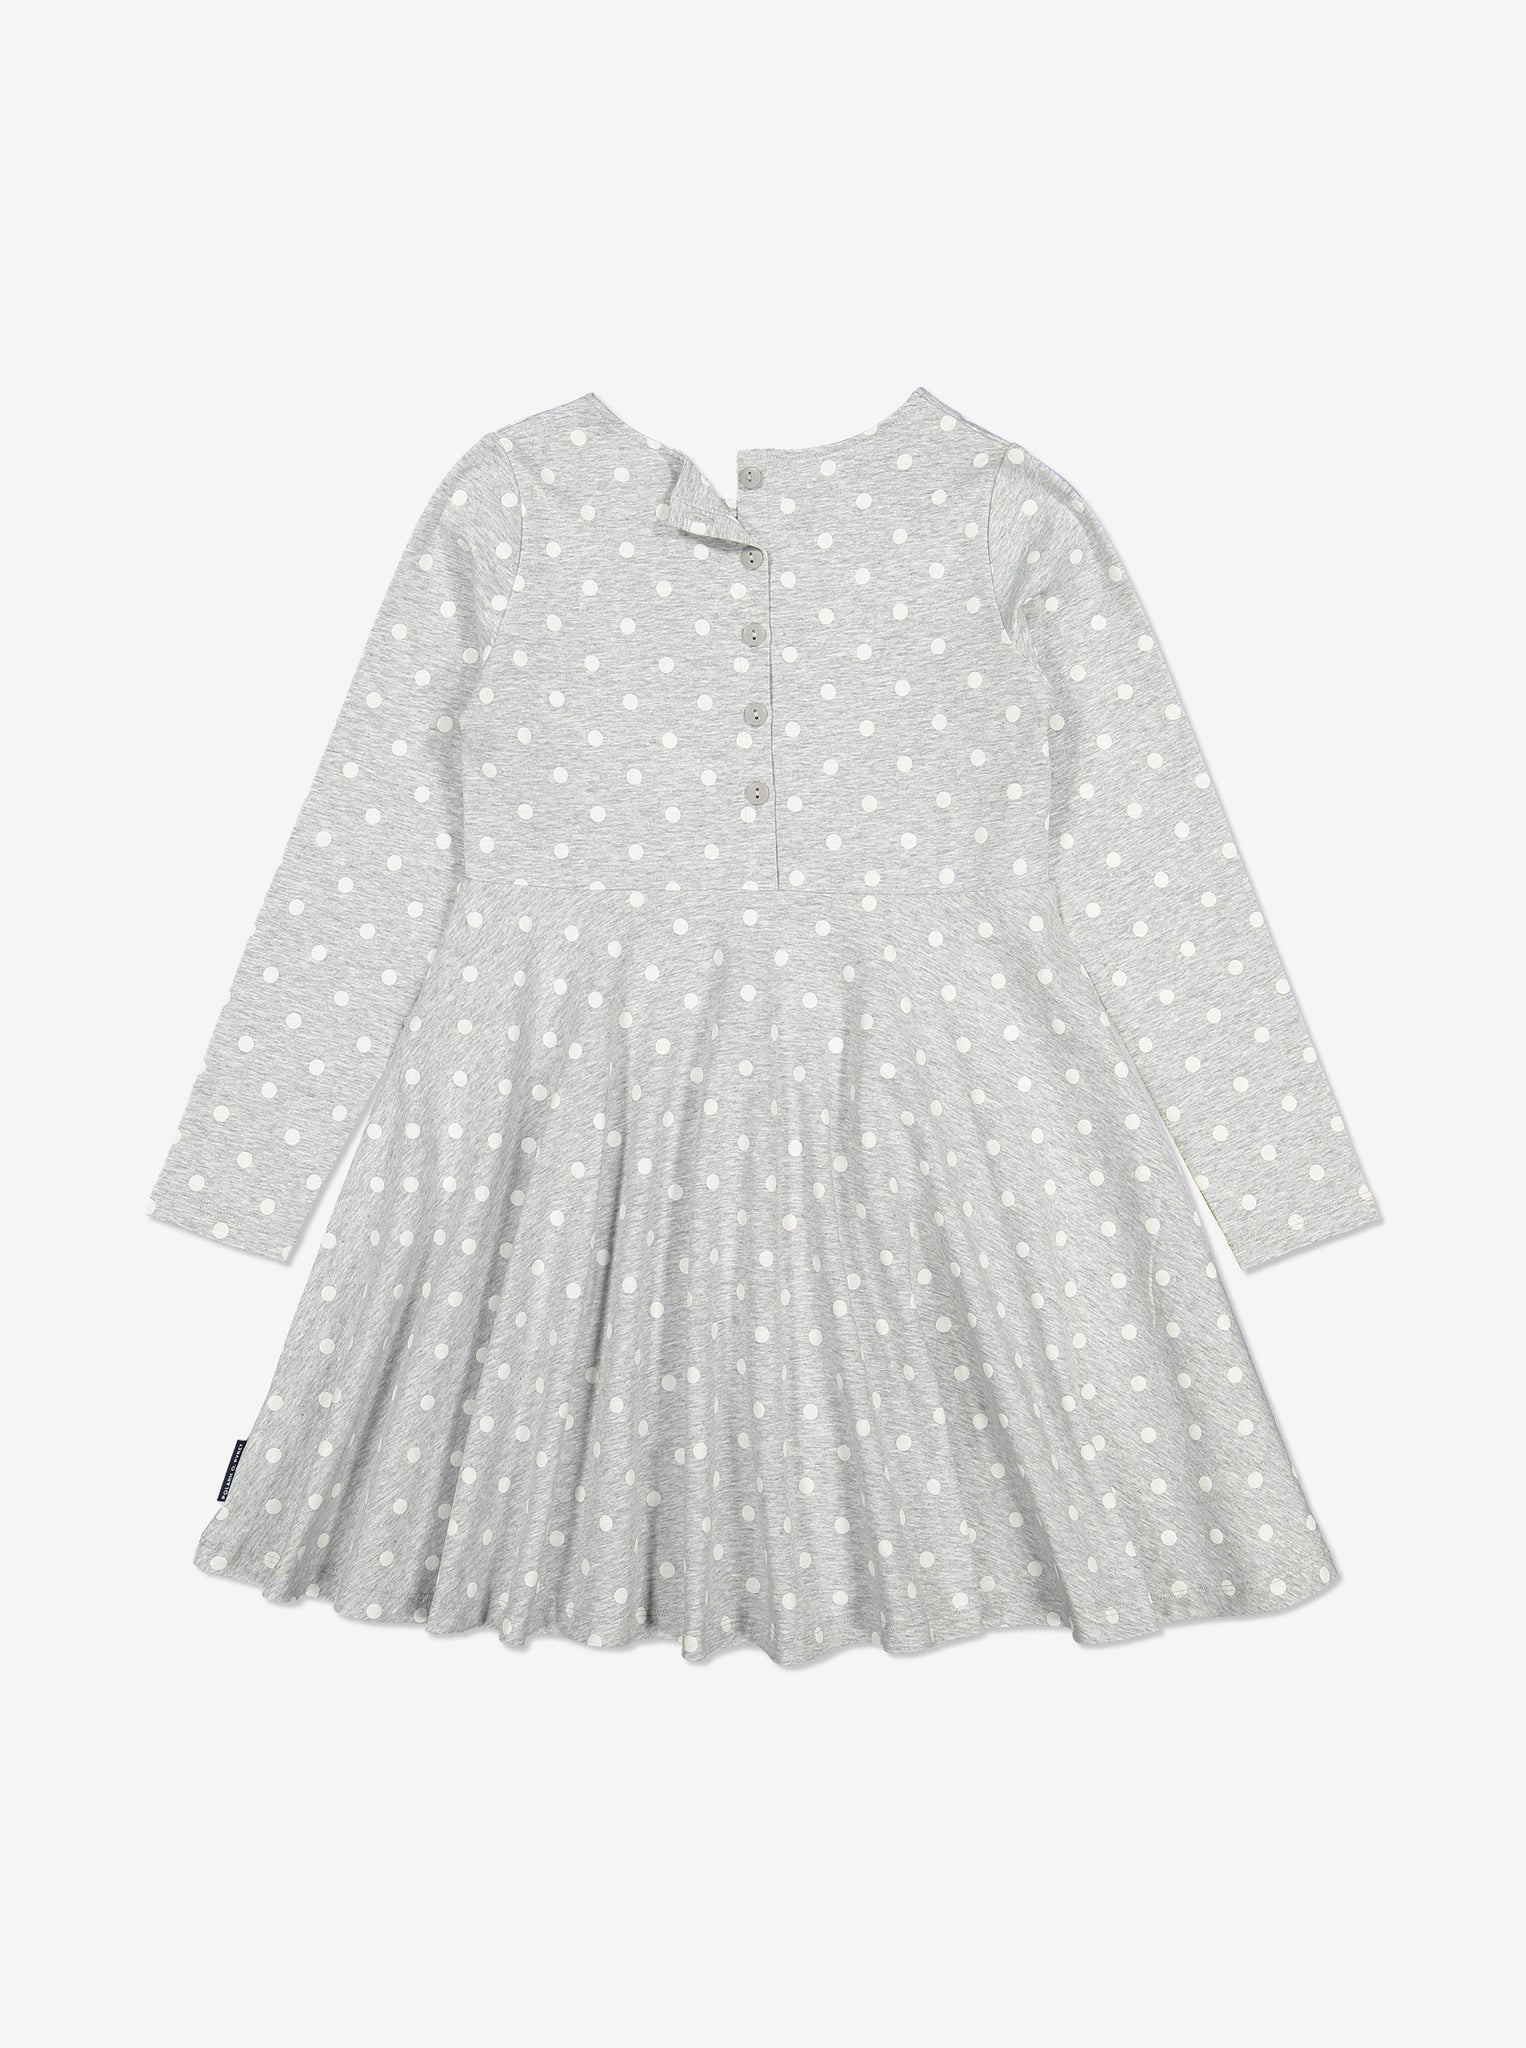 Polka Dot Kids Dress-Girl-1-6y-Grey